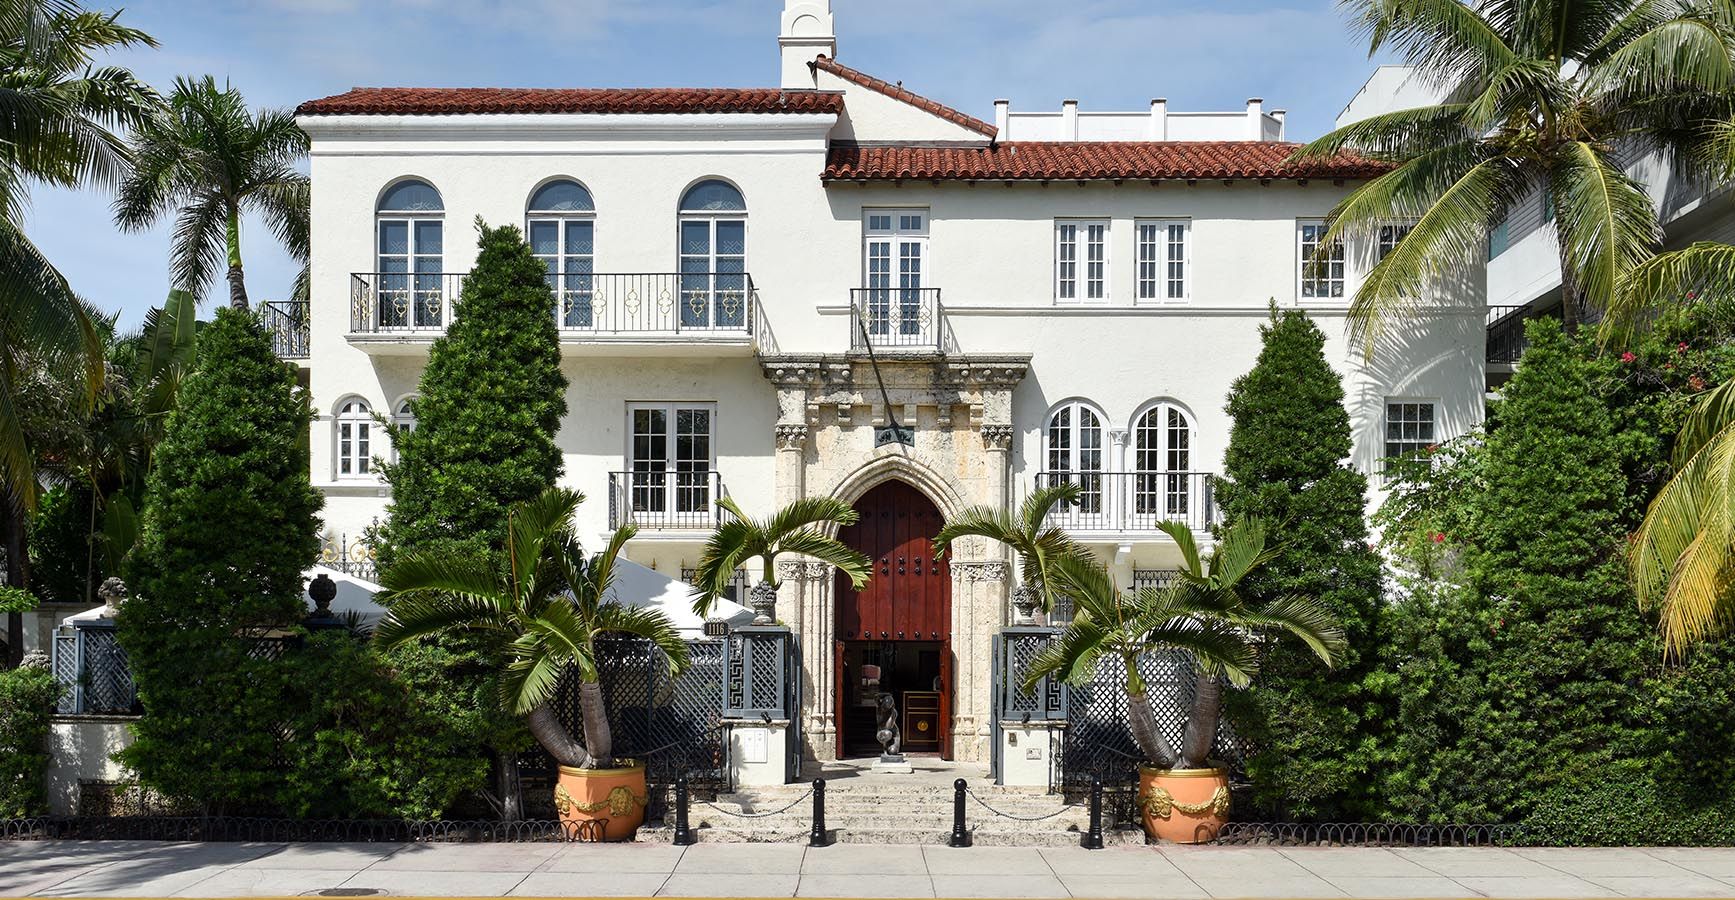 Neerduwen behandeling kraai Versace Mansion Is Now a Hotel - History of Gianni Versace's Miami Home